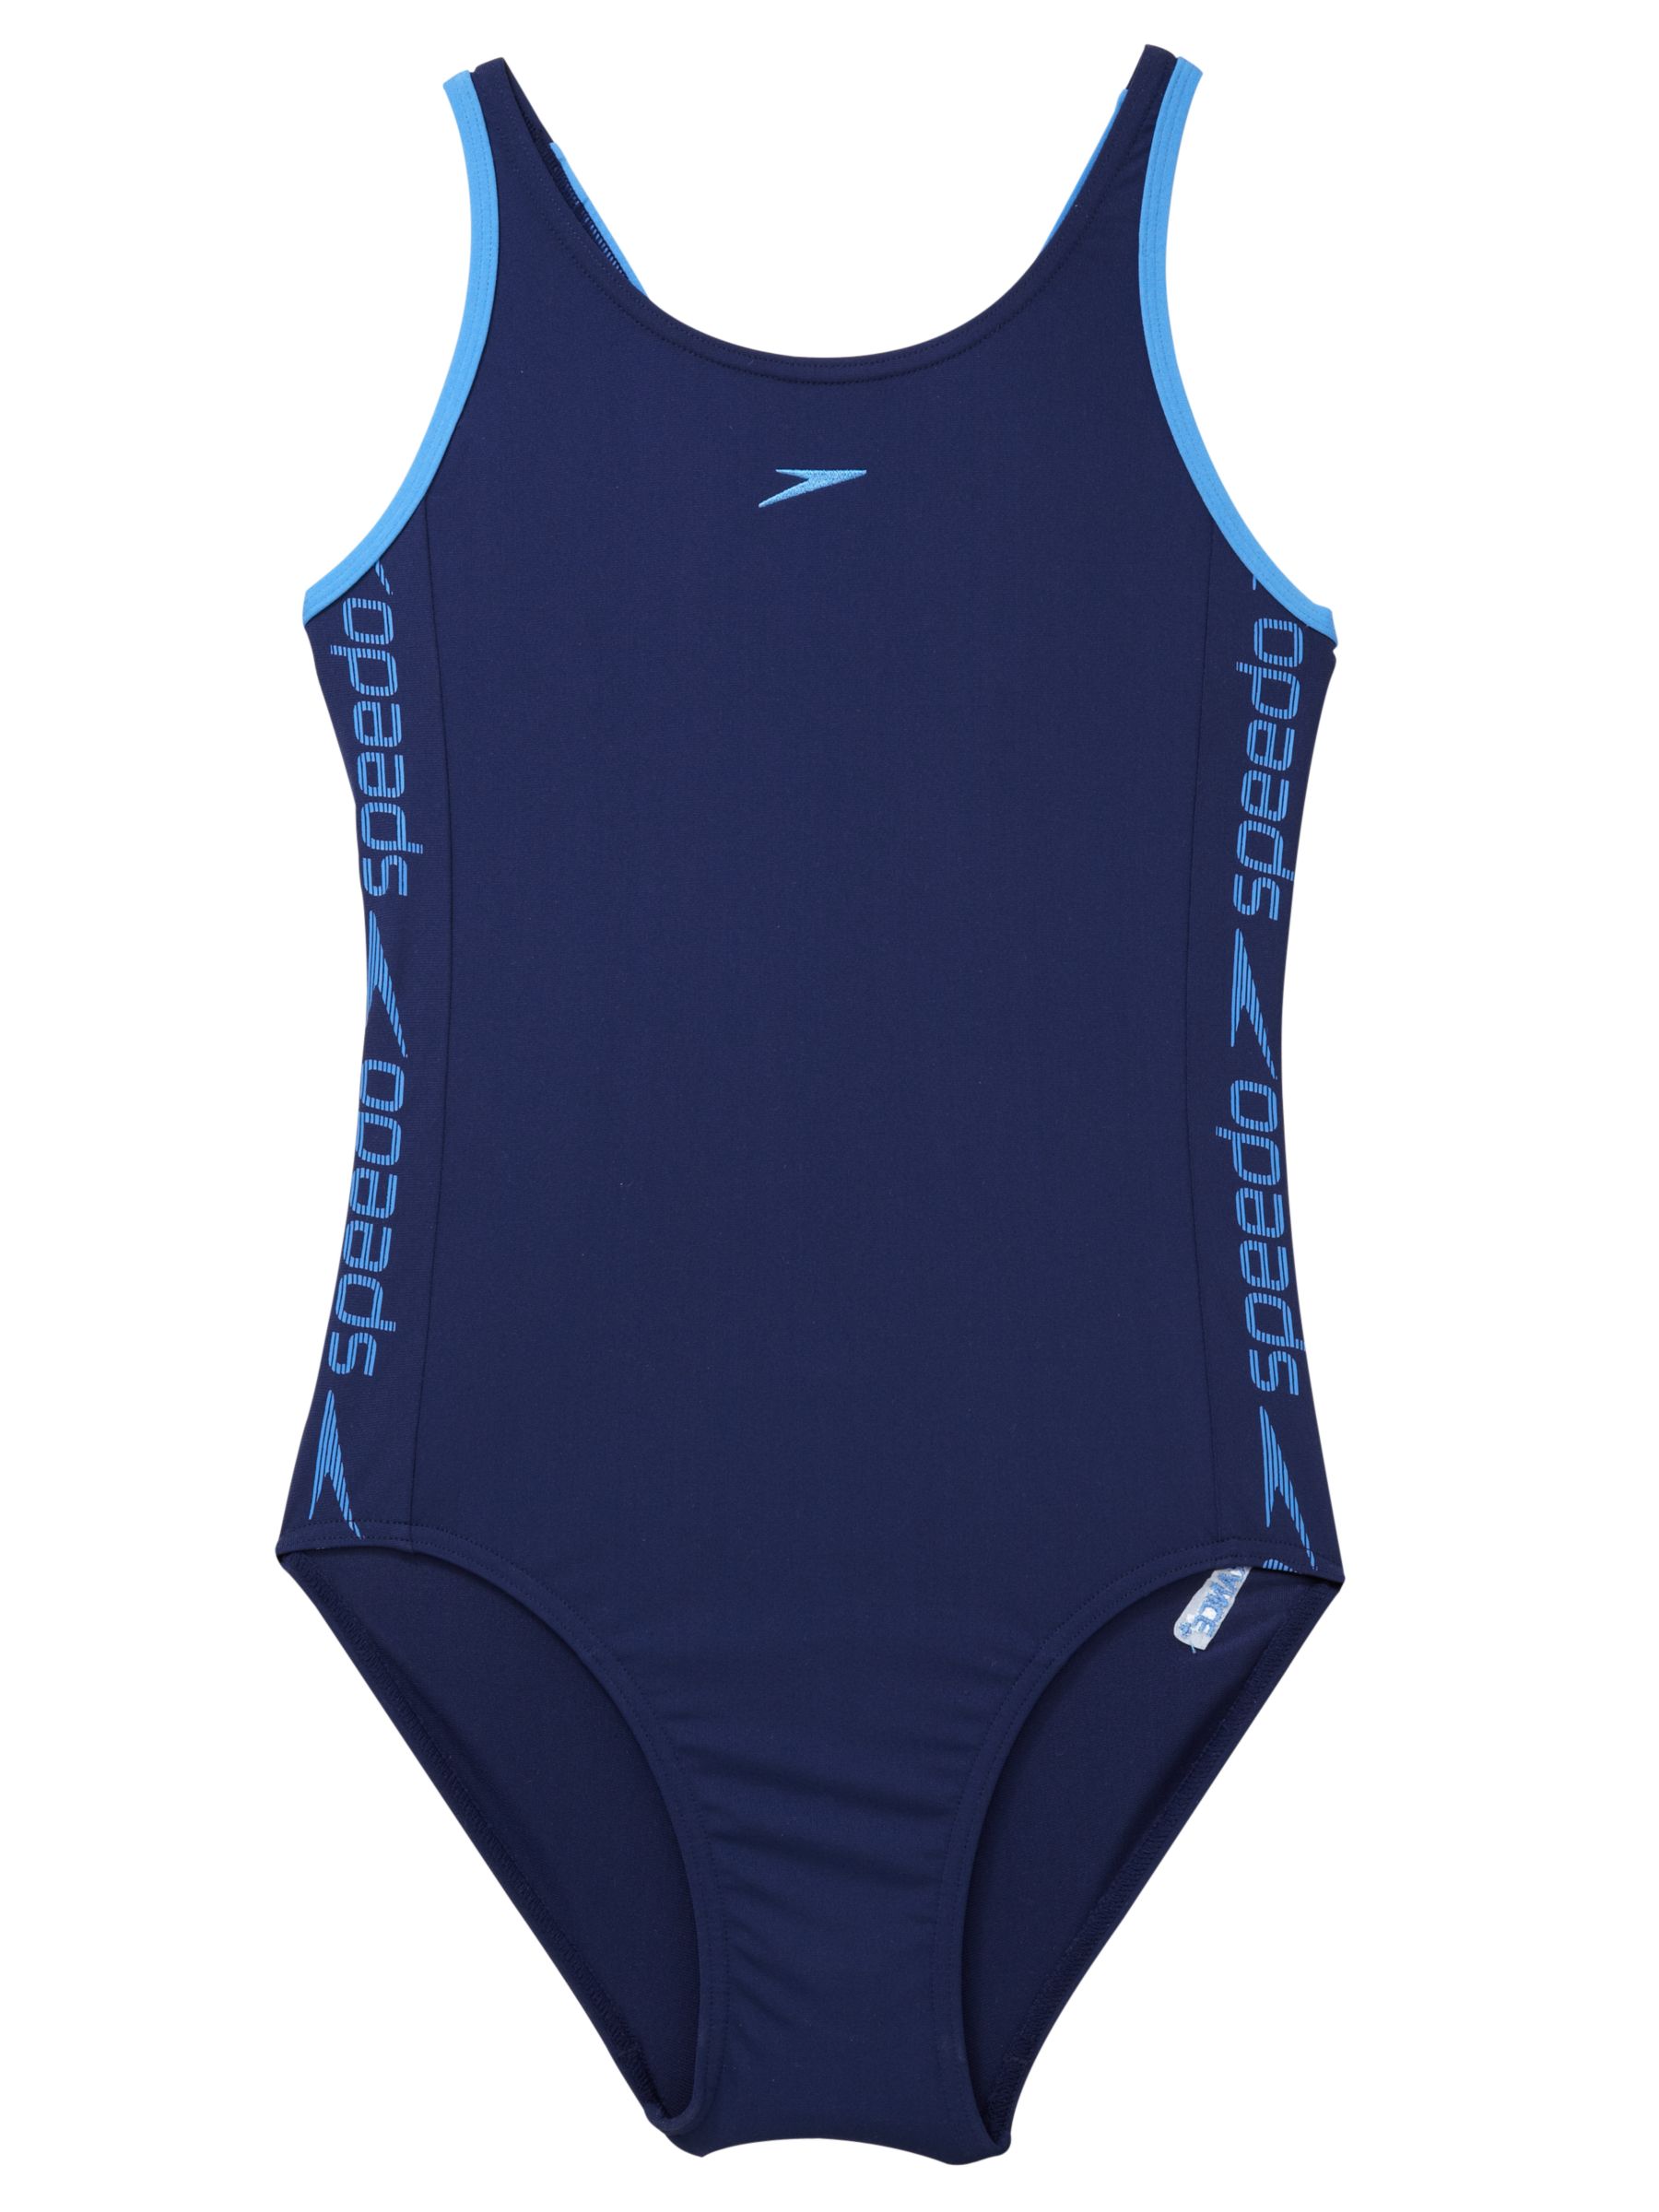 Speedo Superiority Swimsuit, Navy blue